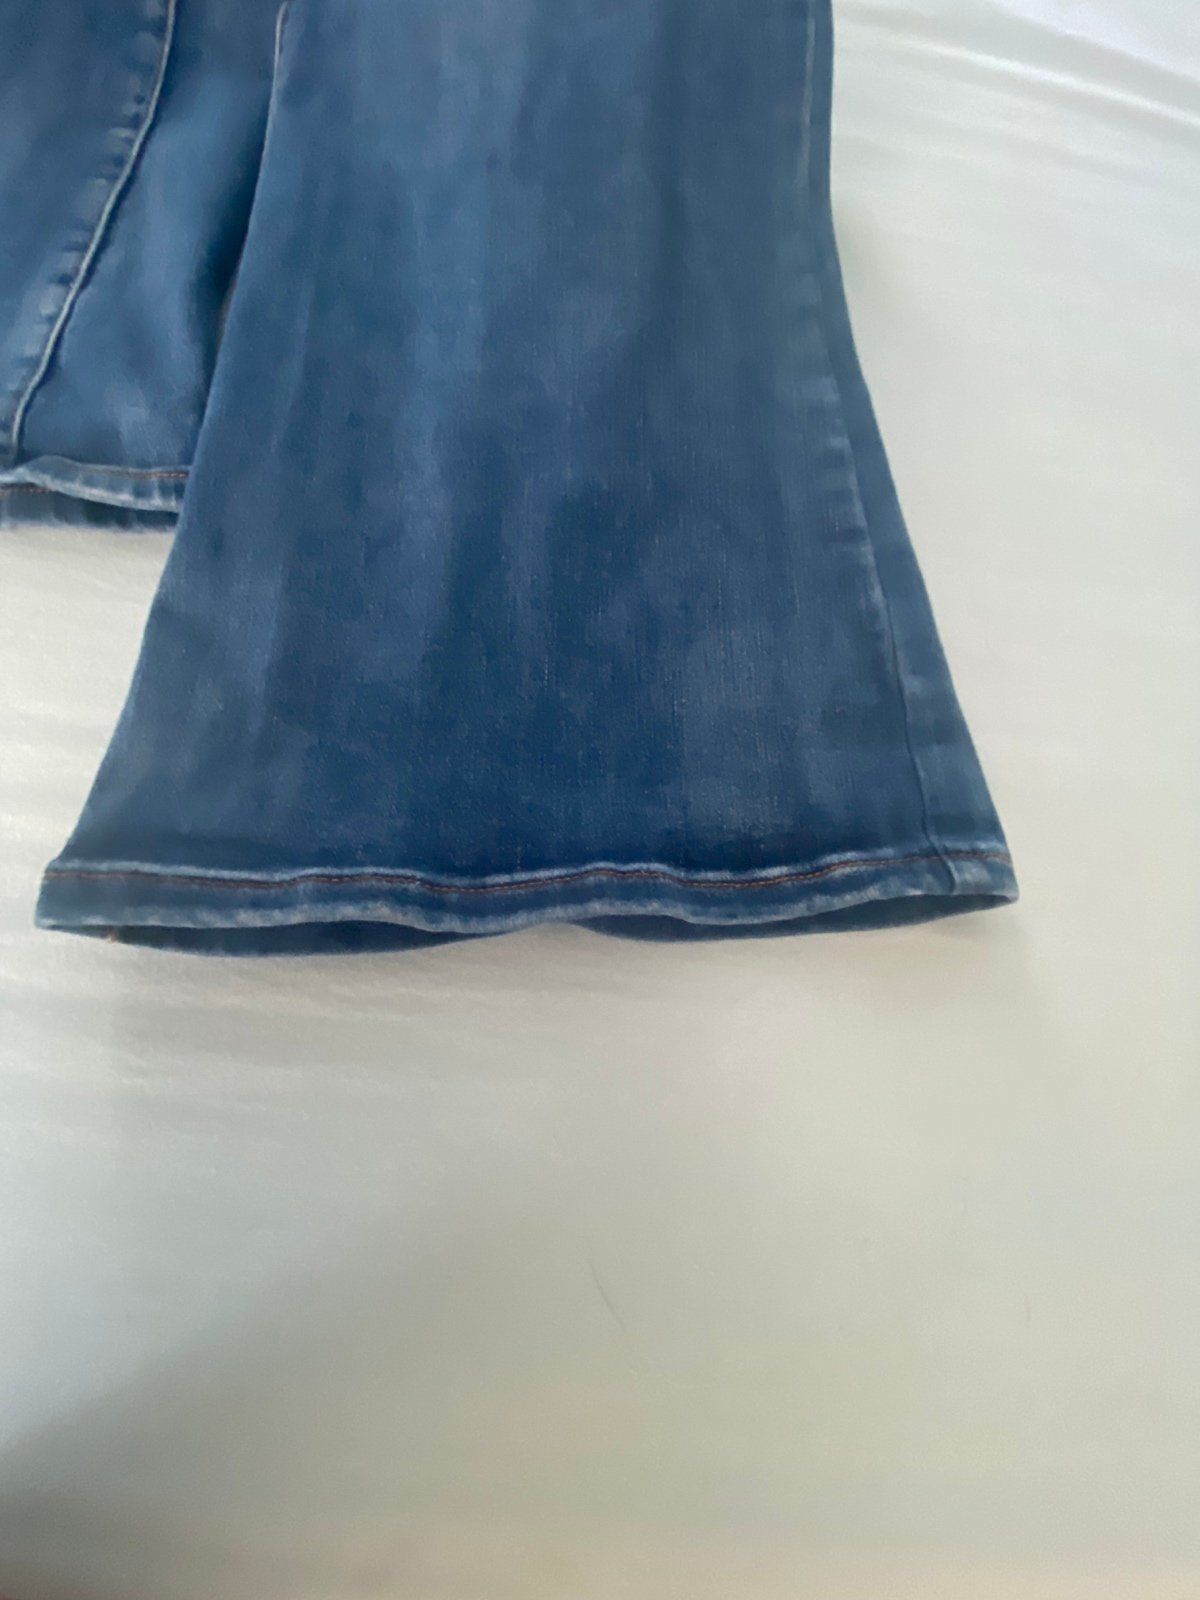 Latest  celebrity PINK jeans size 11/30 iX4QKPnjz online store